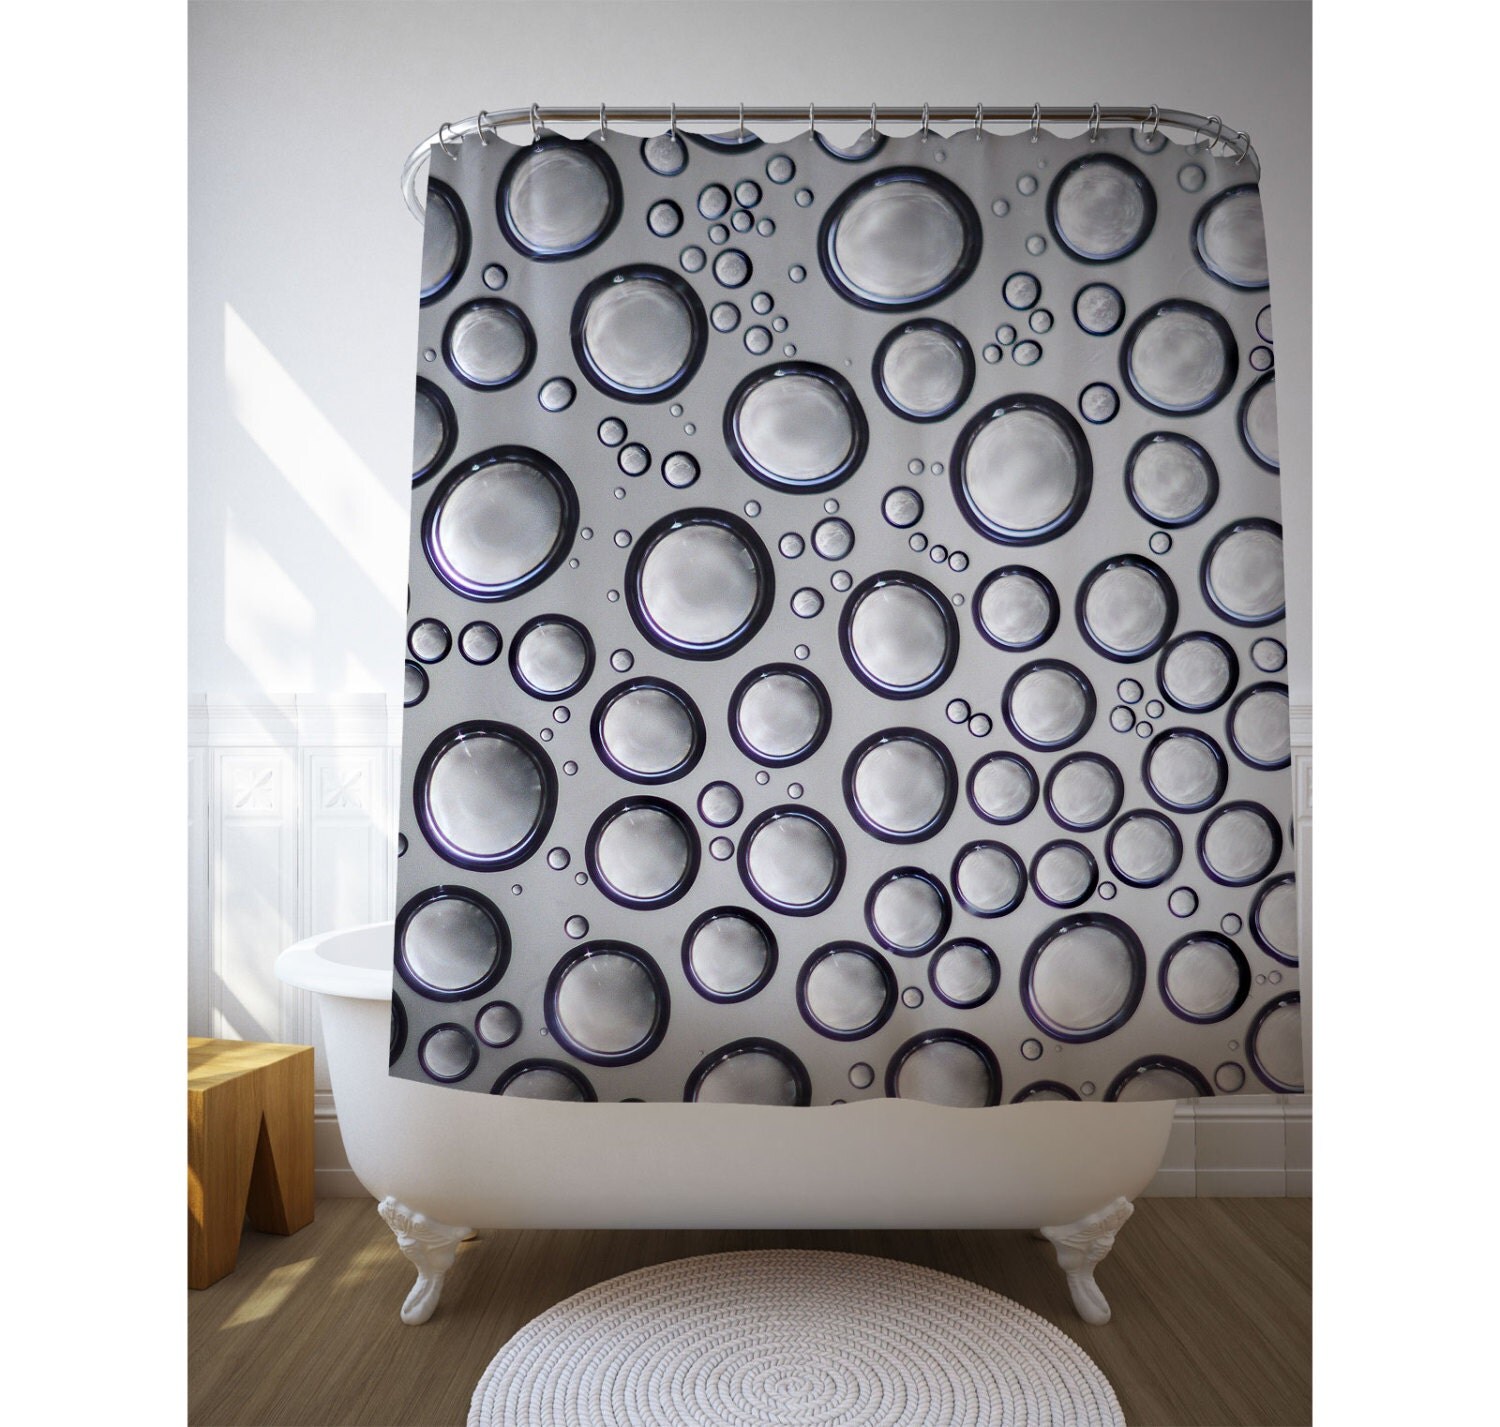 Cool Shower Curtains Silver Bubbles Bathroom Decor by Macrografiks